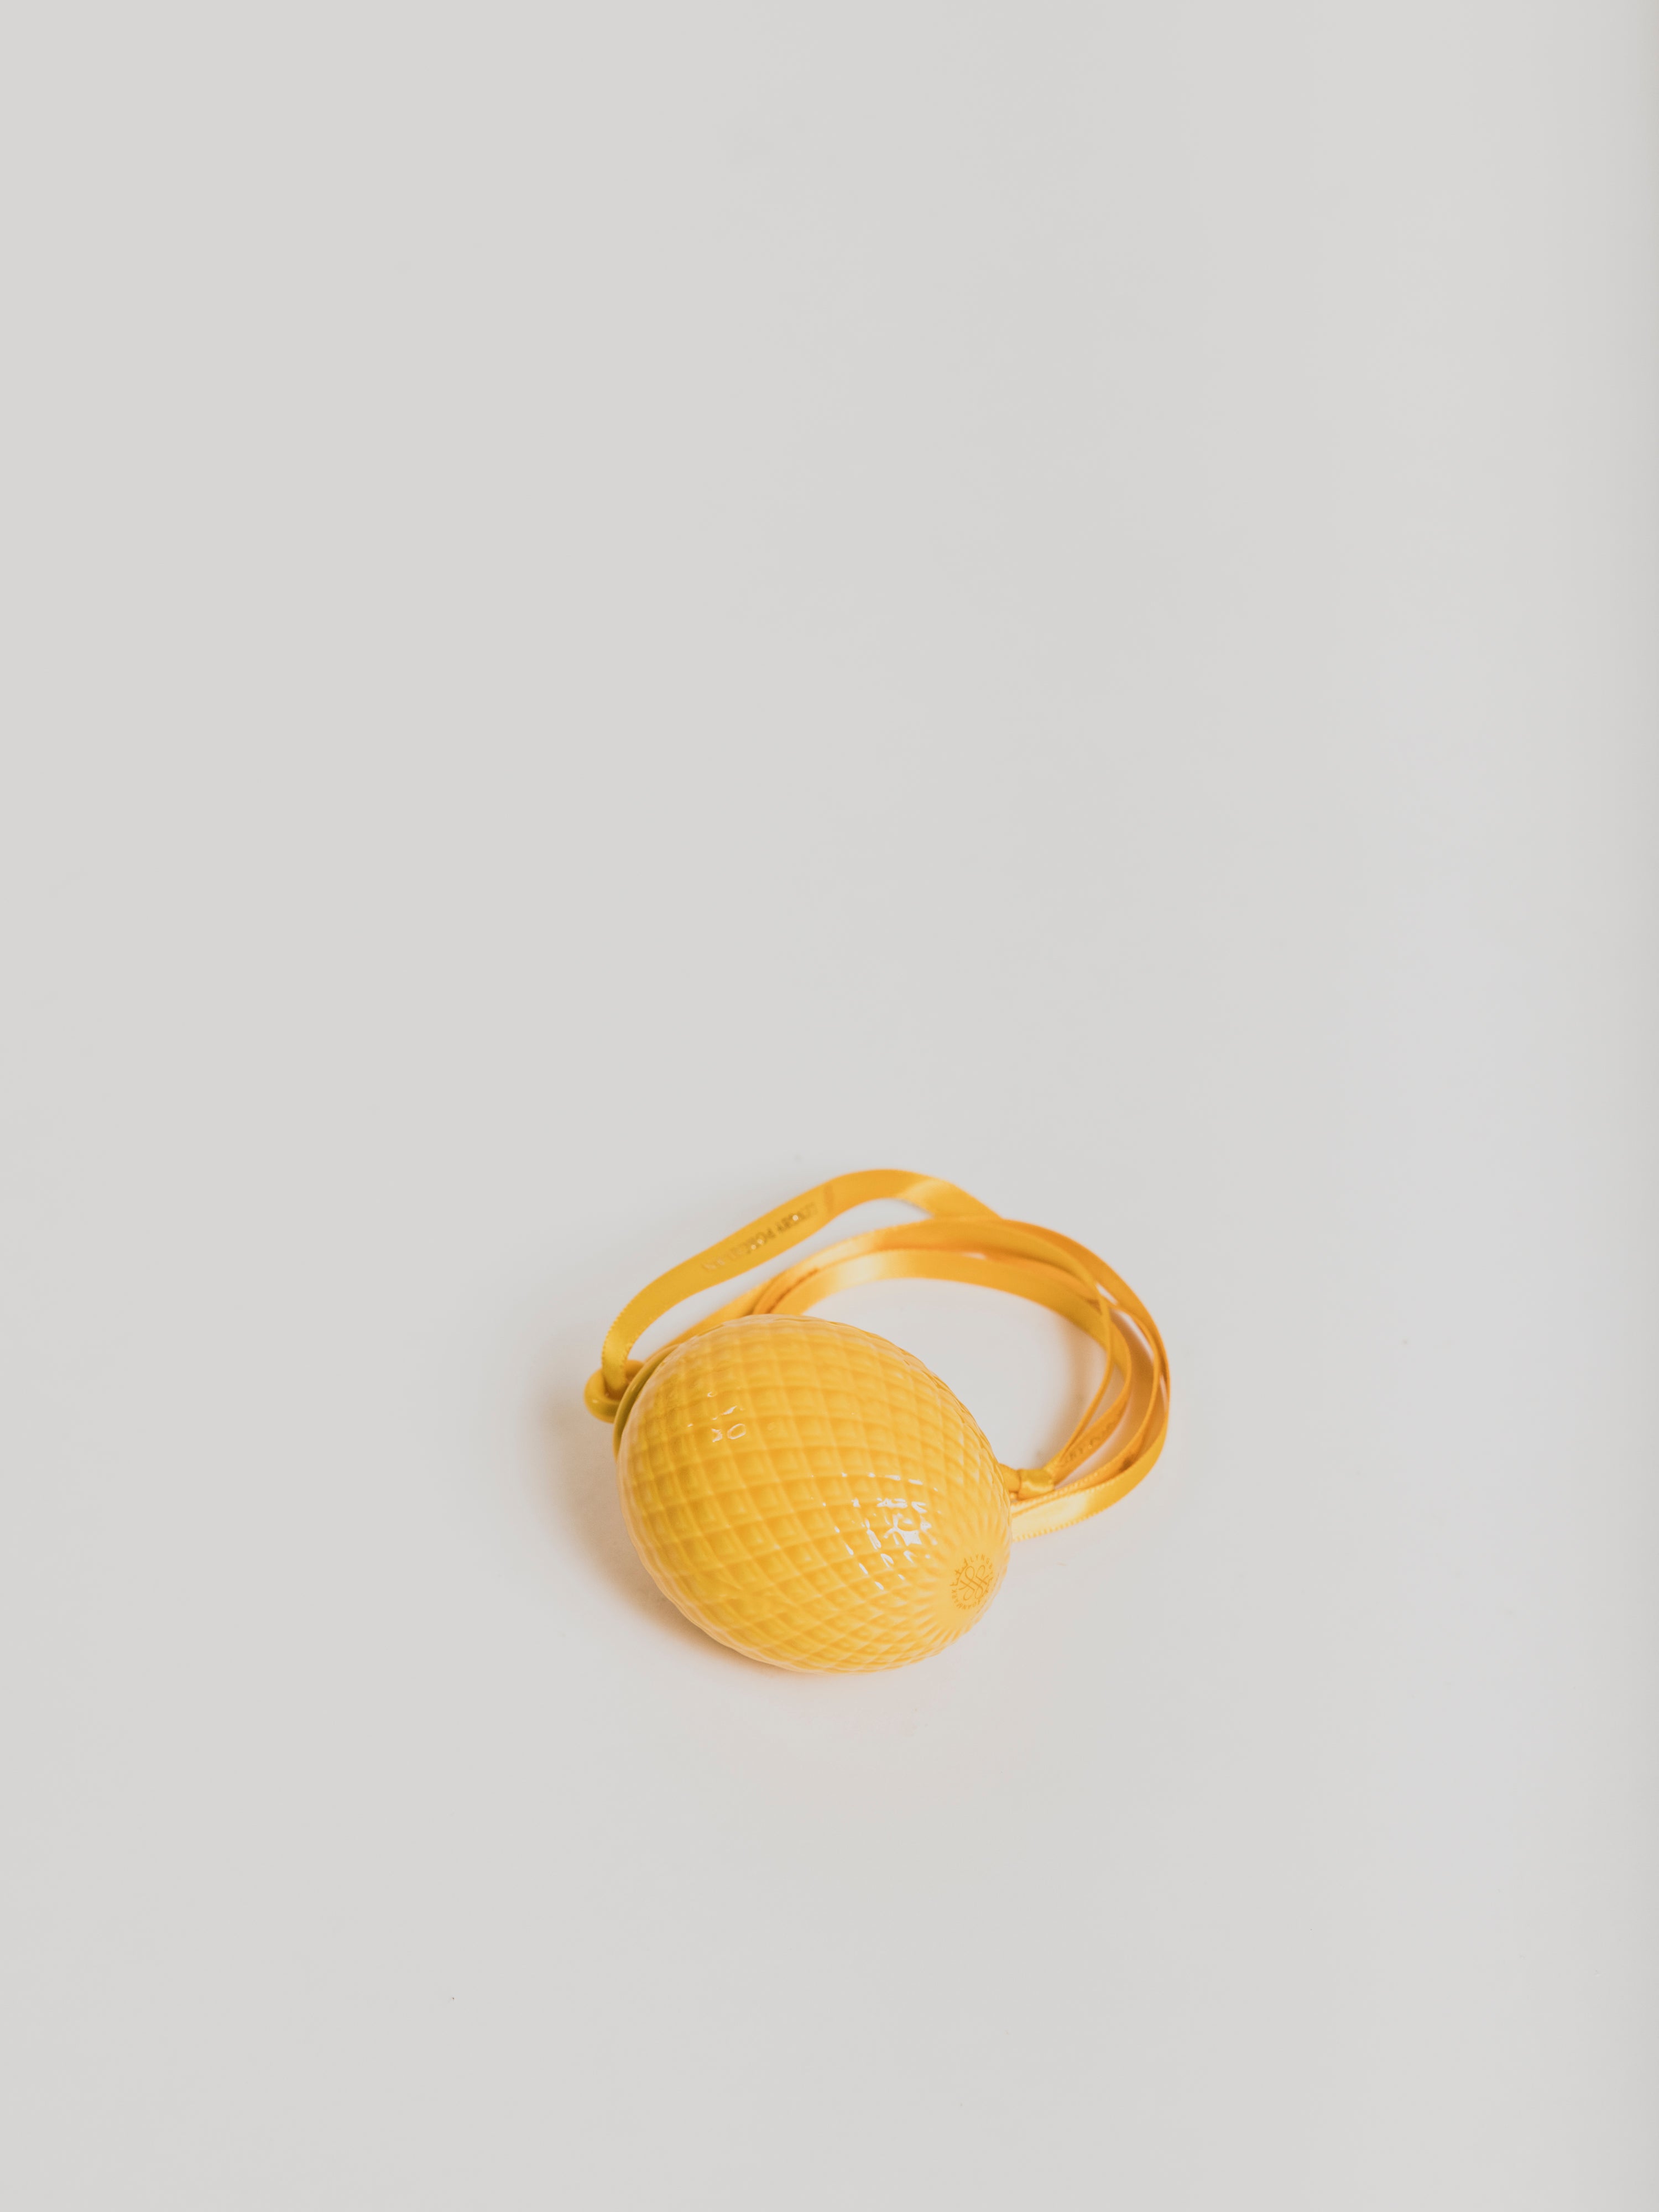 Rhombe Easter egg - Yellow Porcelain - Cigale et Fourmi